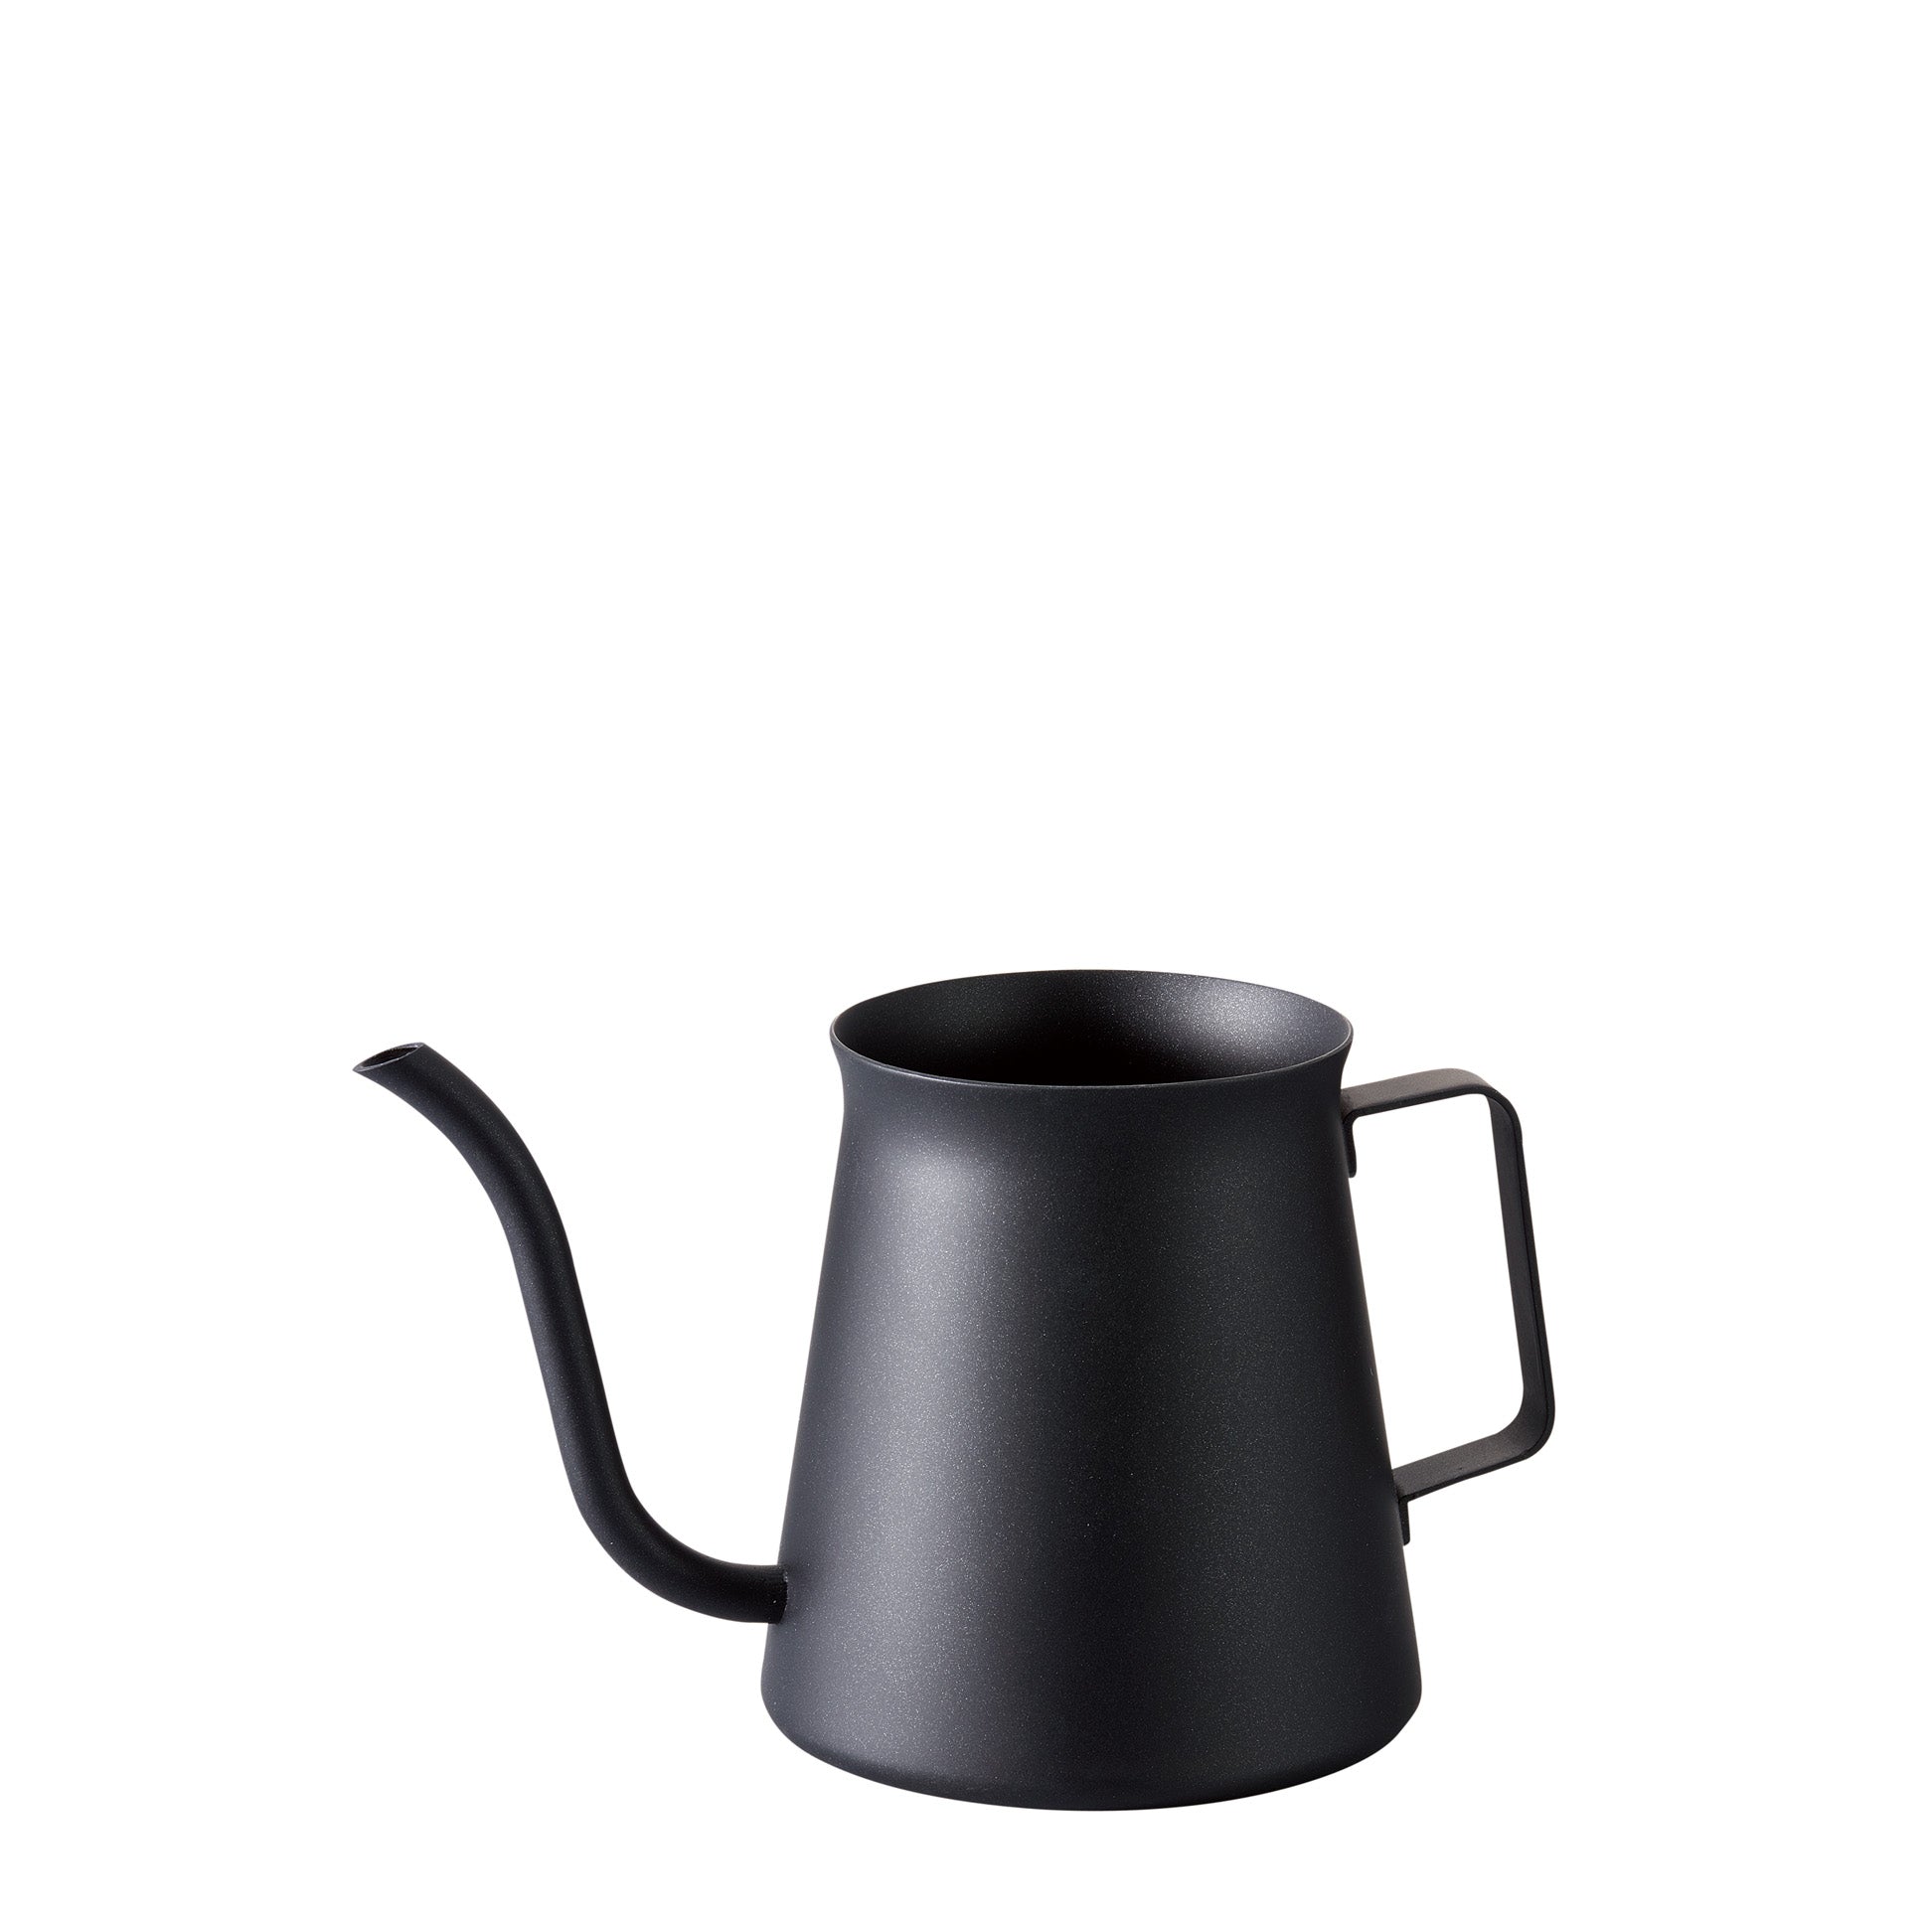 Mini drip kettle "kasuya" model - 300 ml